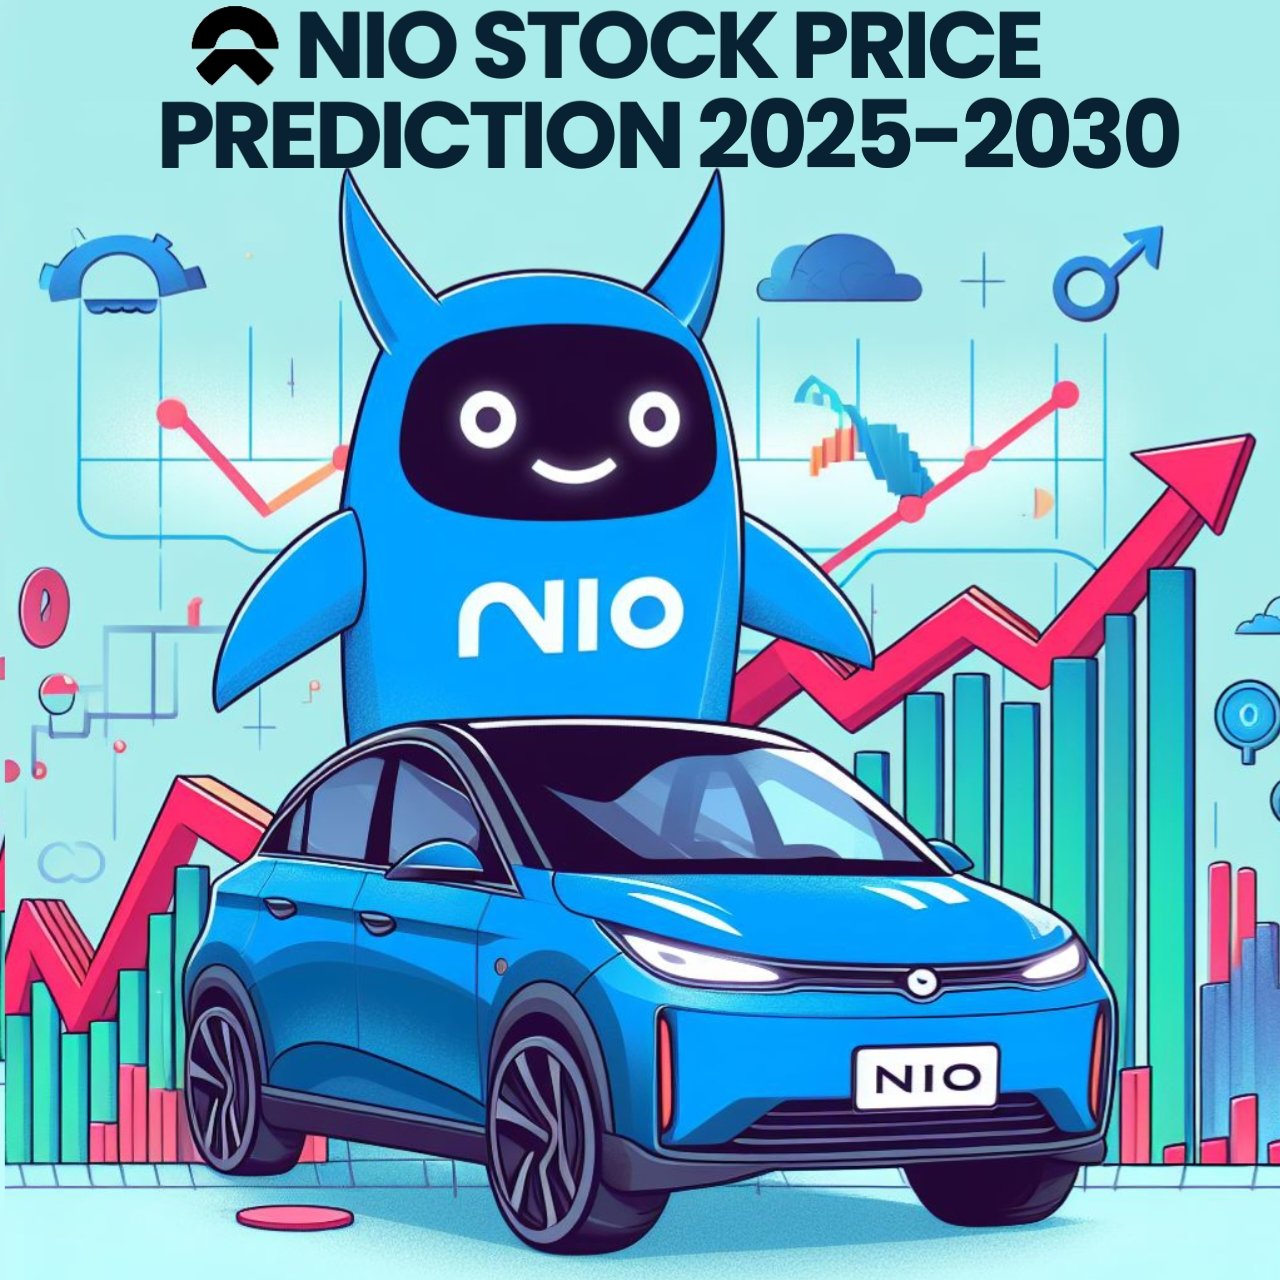 NIO Stock Price Prediction 2025